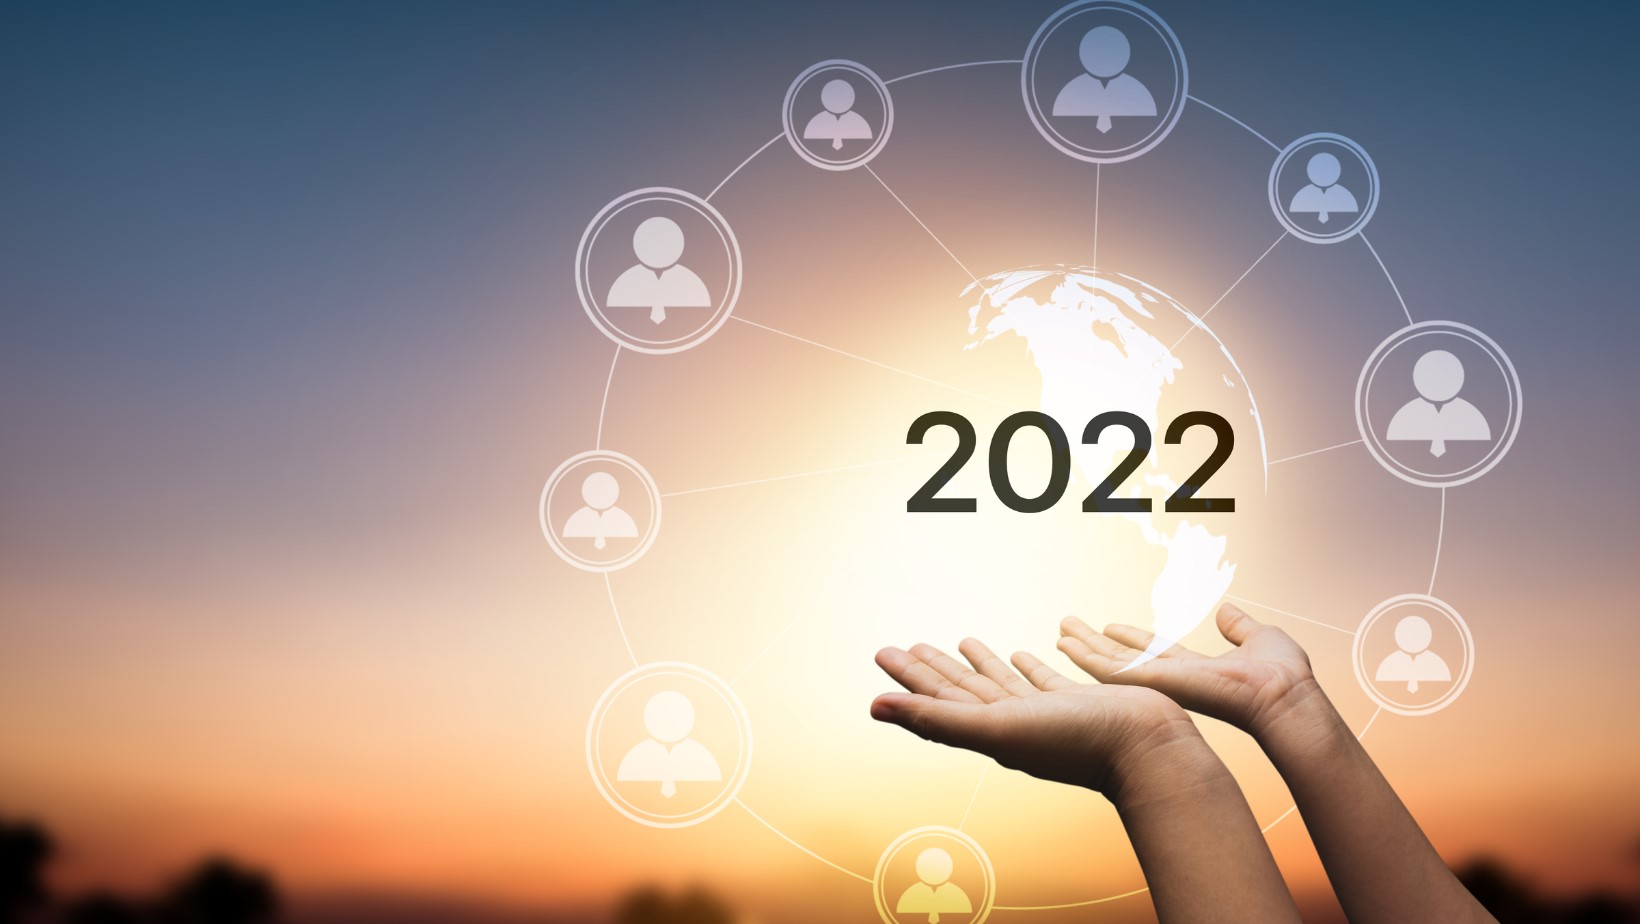 2022 OSINT Trends